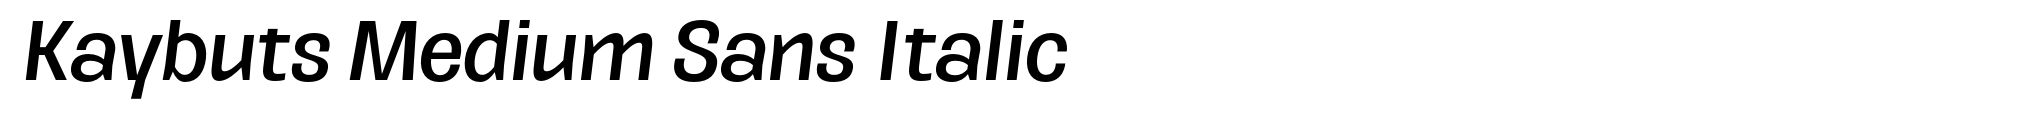 Kaybuts Medium Sans Italic image